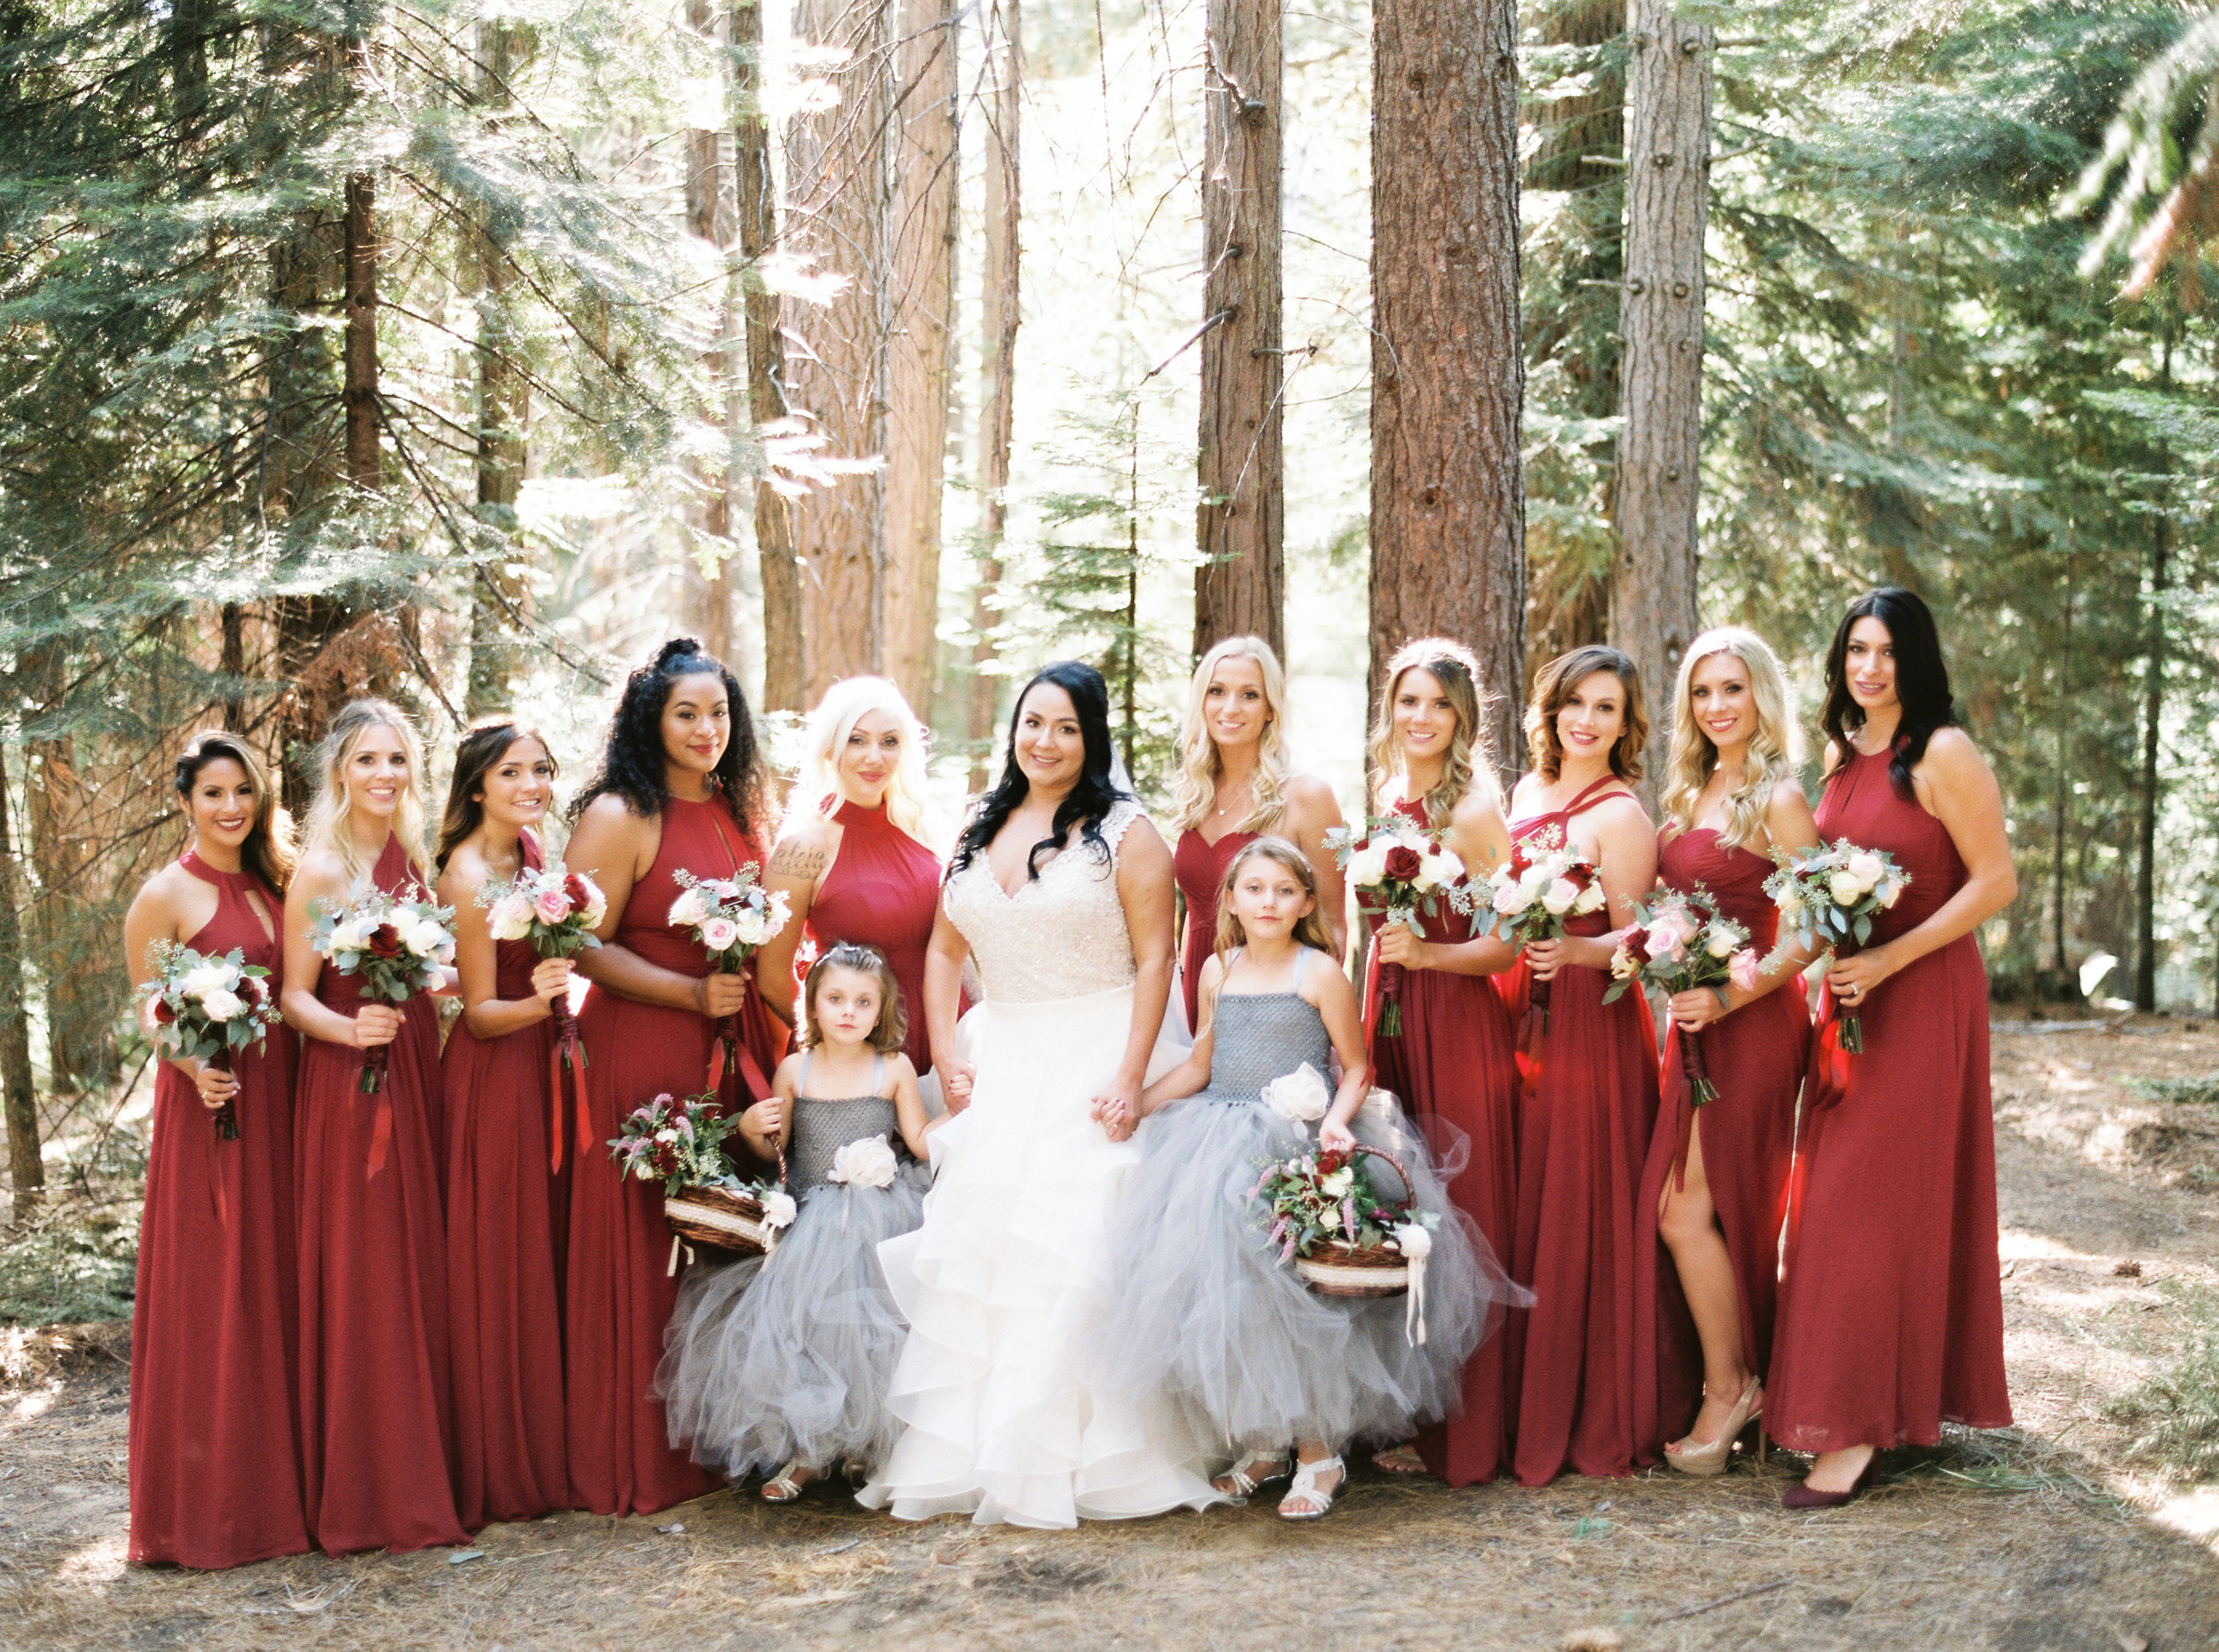 Tenaya-lodge-wedding-at-yosemite-national-park-california-47.jpg